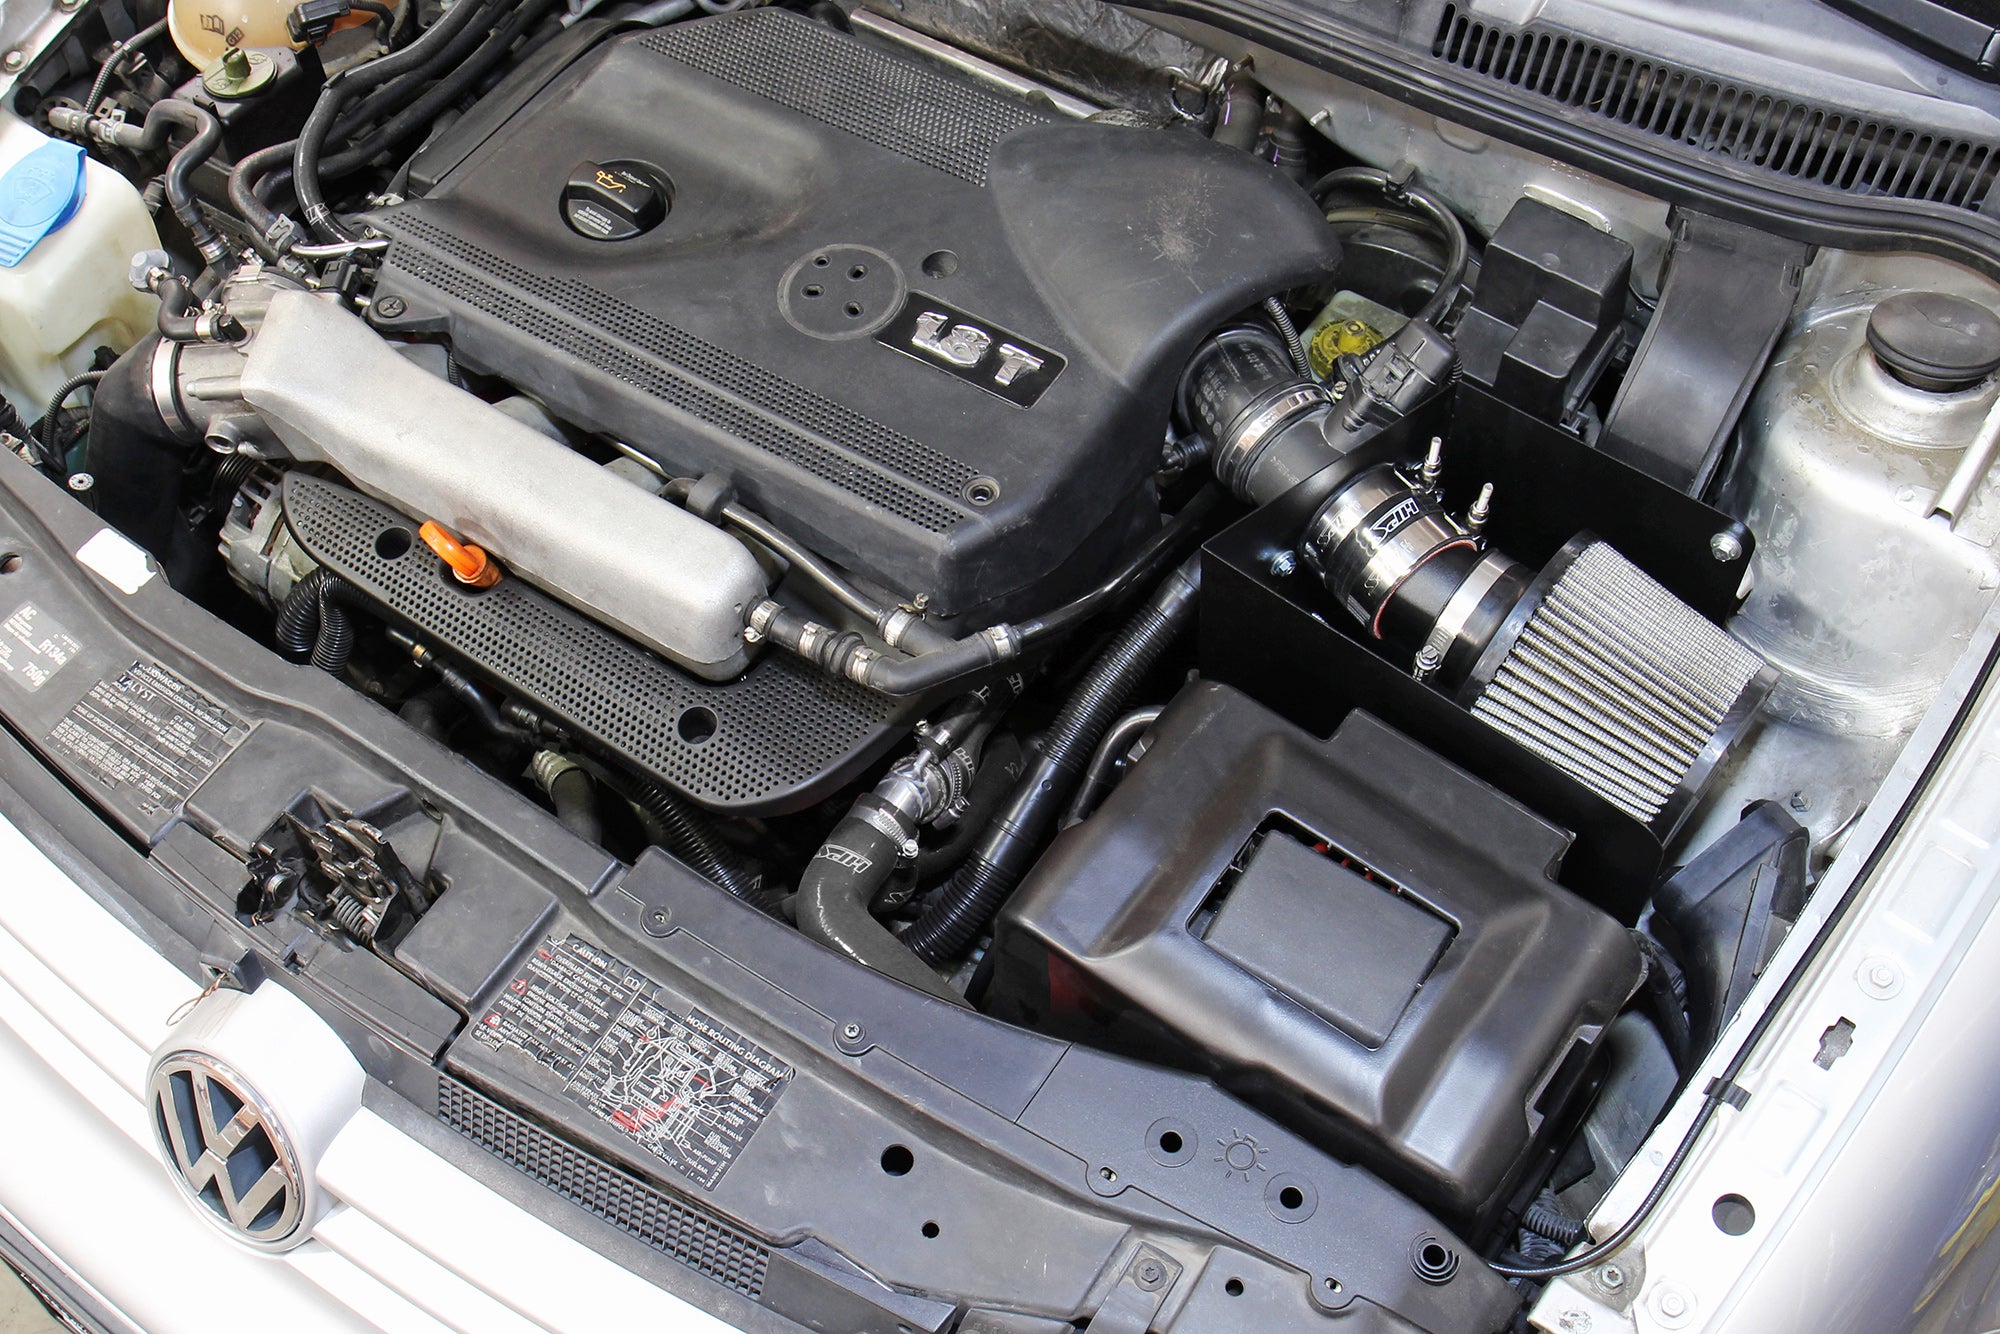 HPS Cold Air Intake Kit 827-685 installed 2000-2005 Volkswagen Jetta MK4 1.8T Turbo